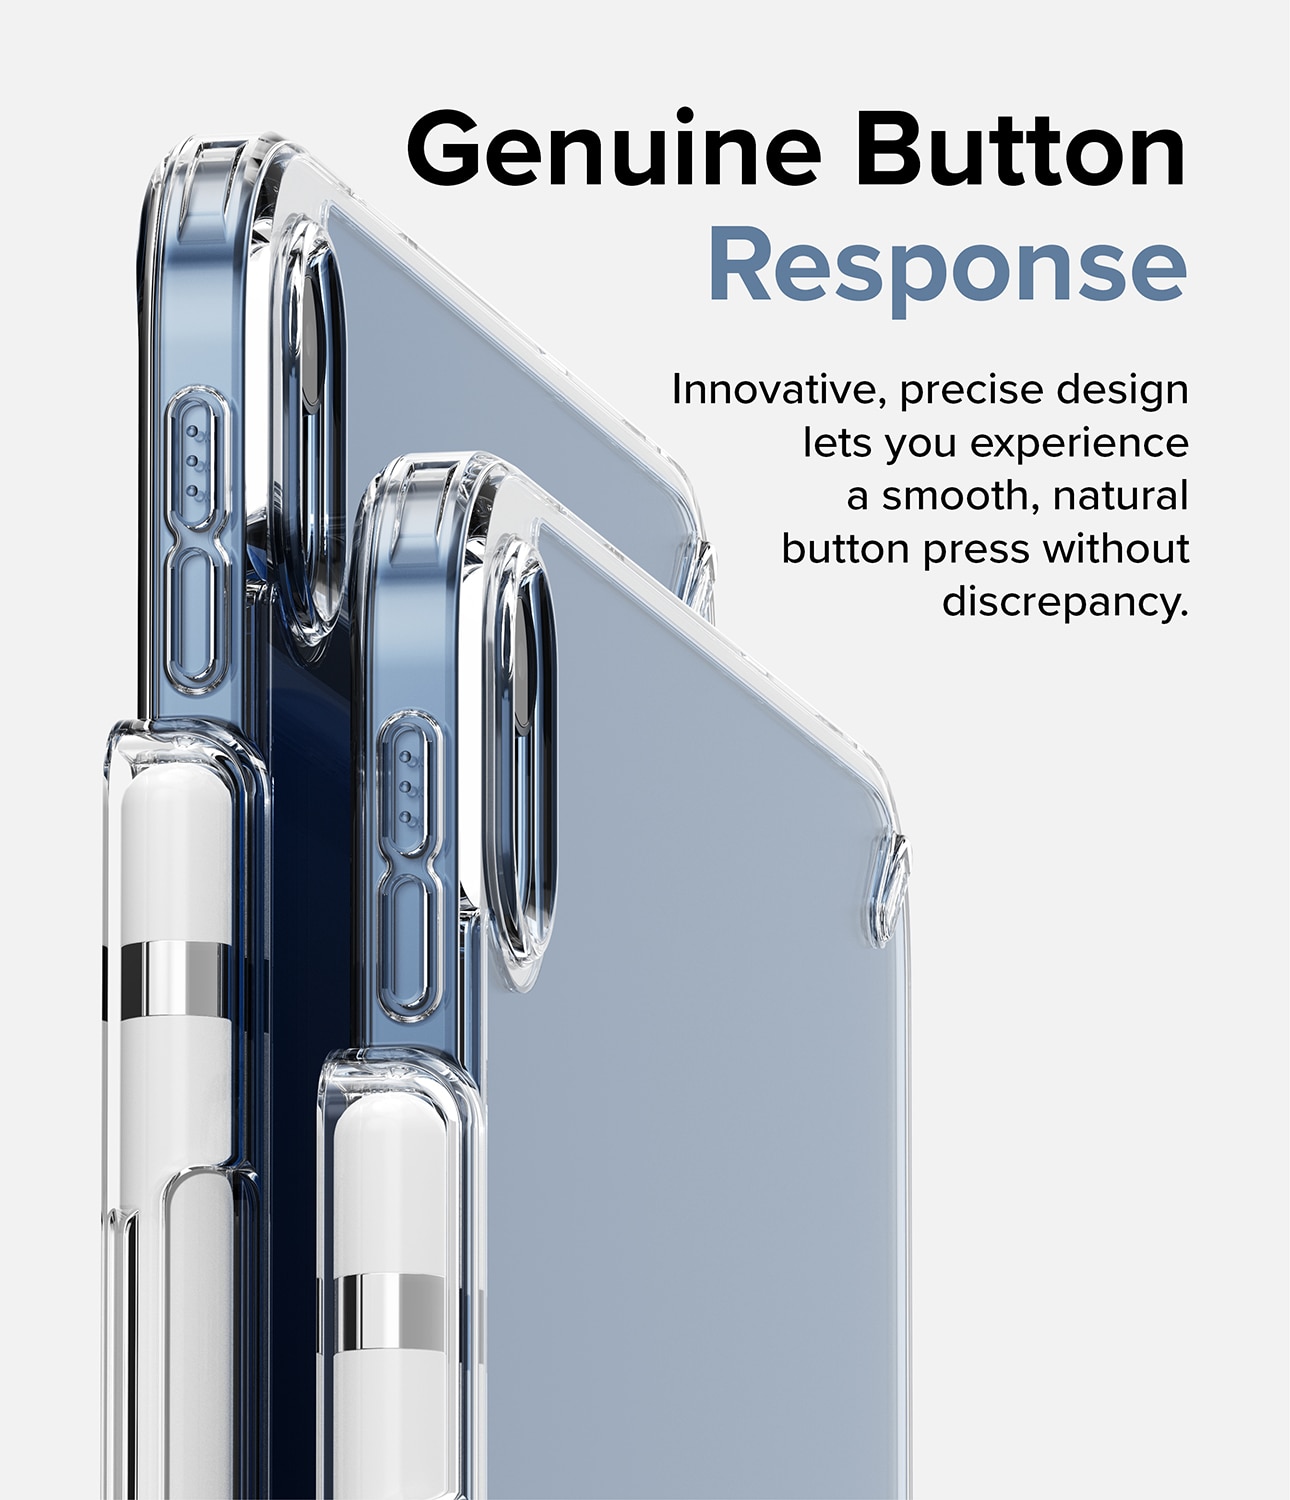 iPad 10.9 10th Gen (2022) Fusion Case Clear